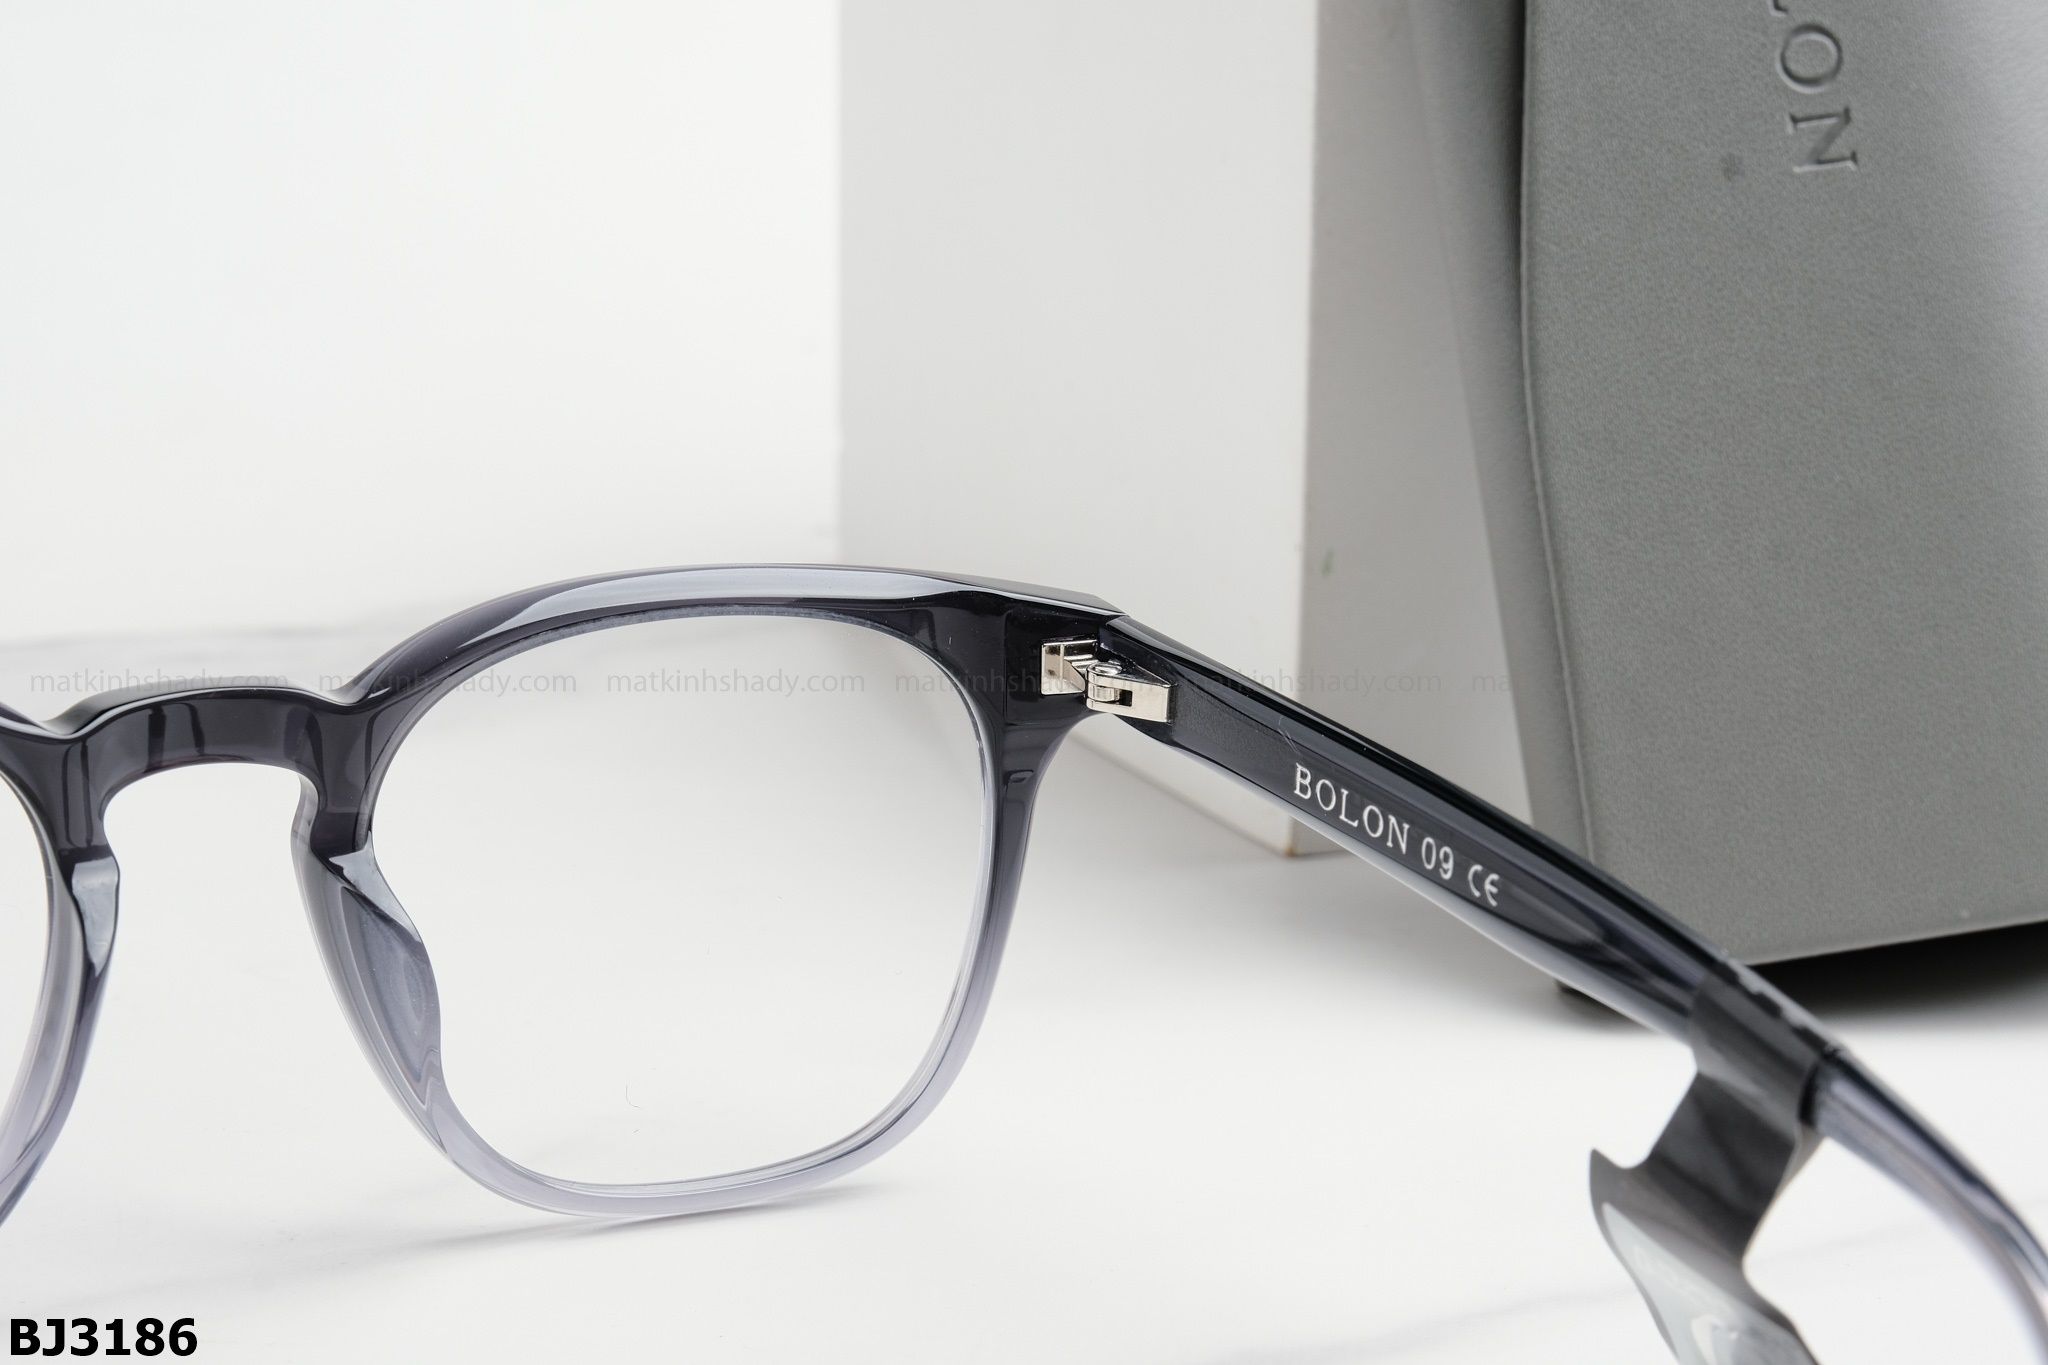  Bolon Eyewear - Glasses - BJ3186 